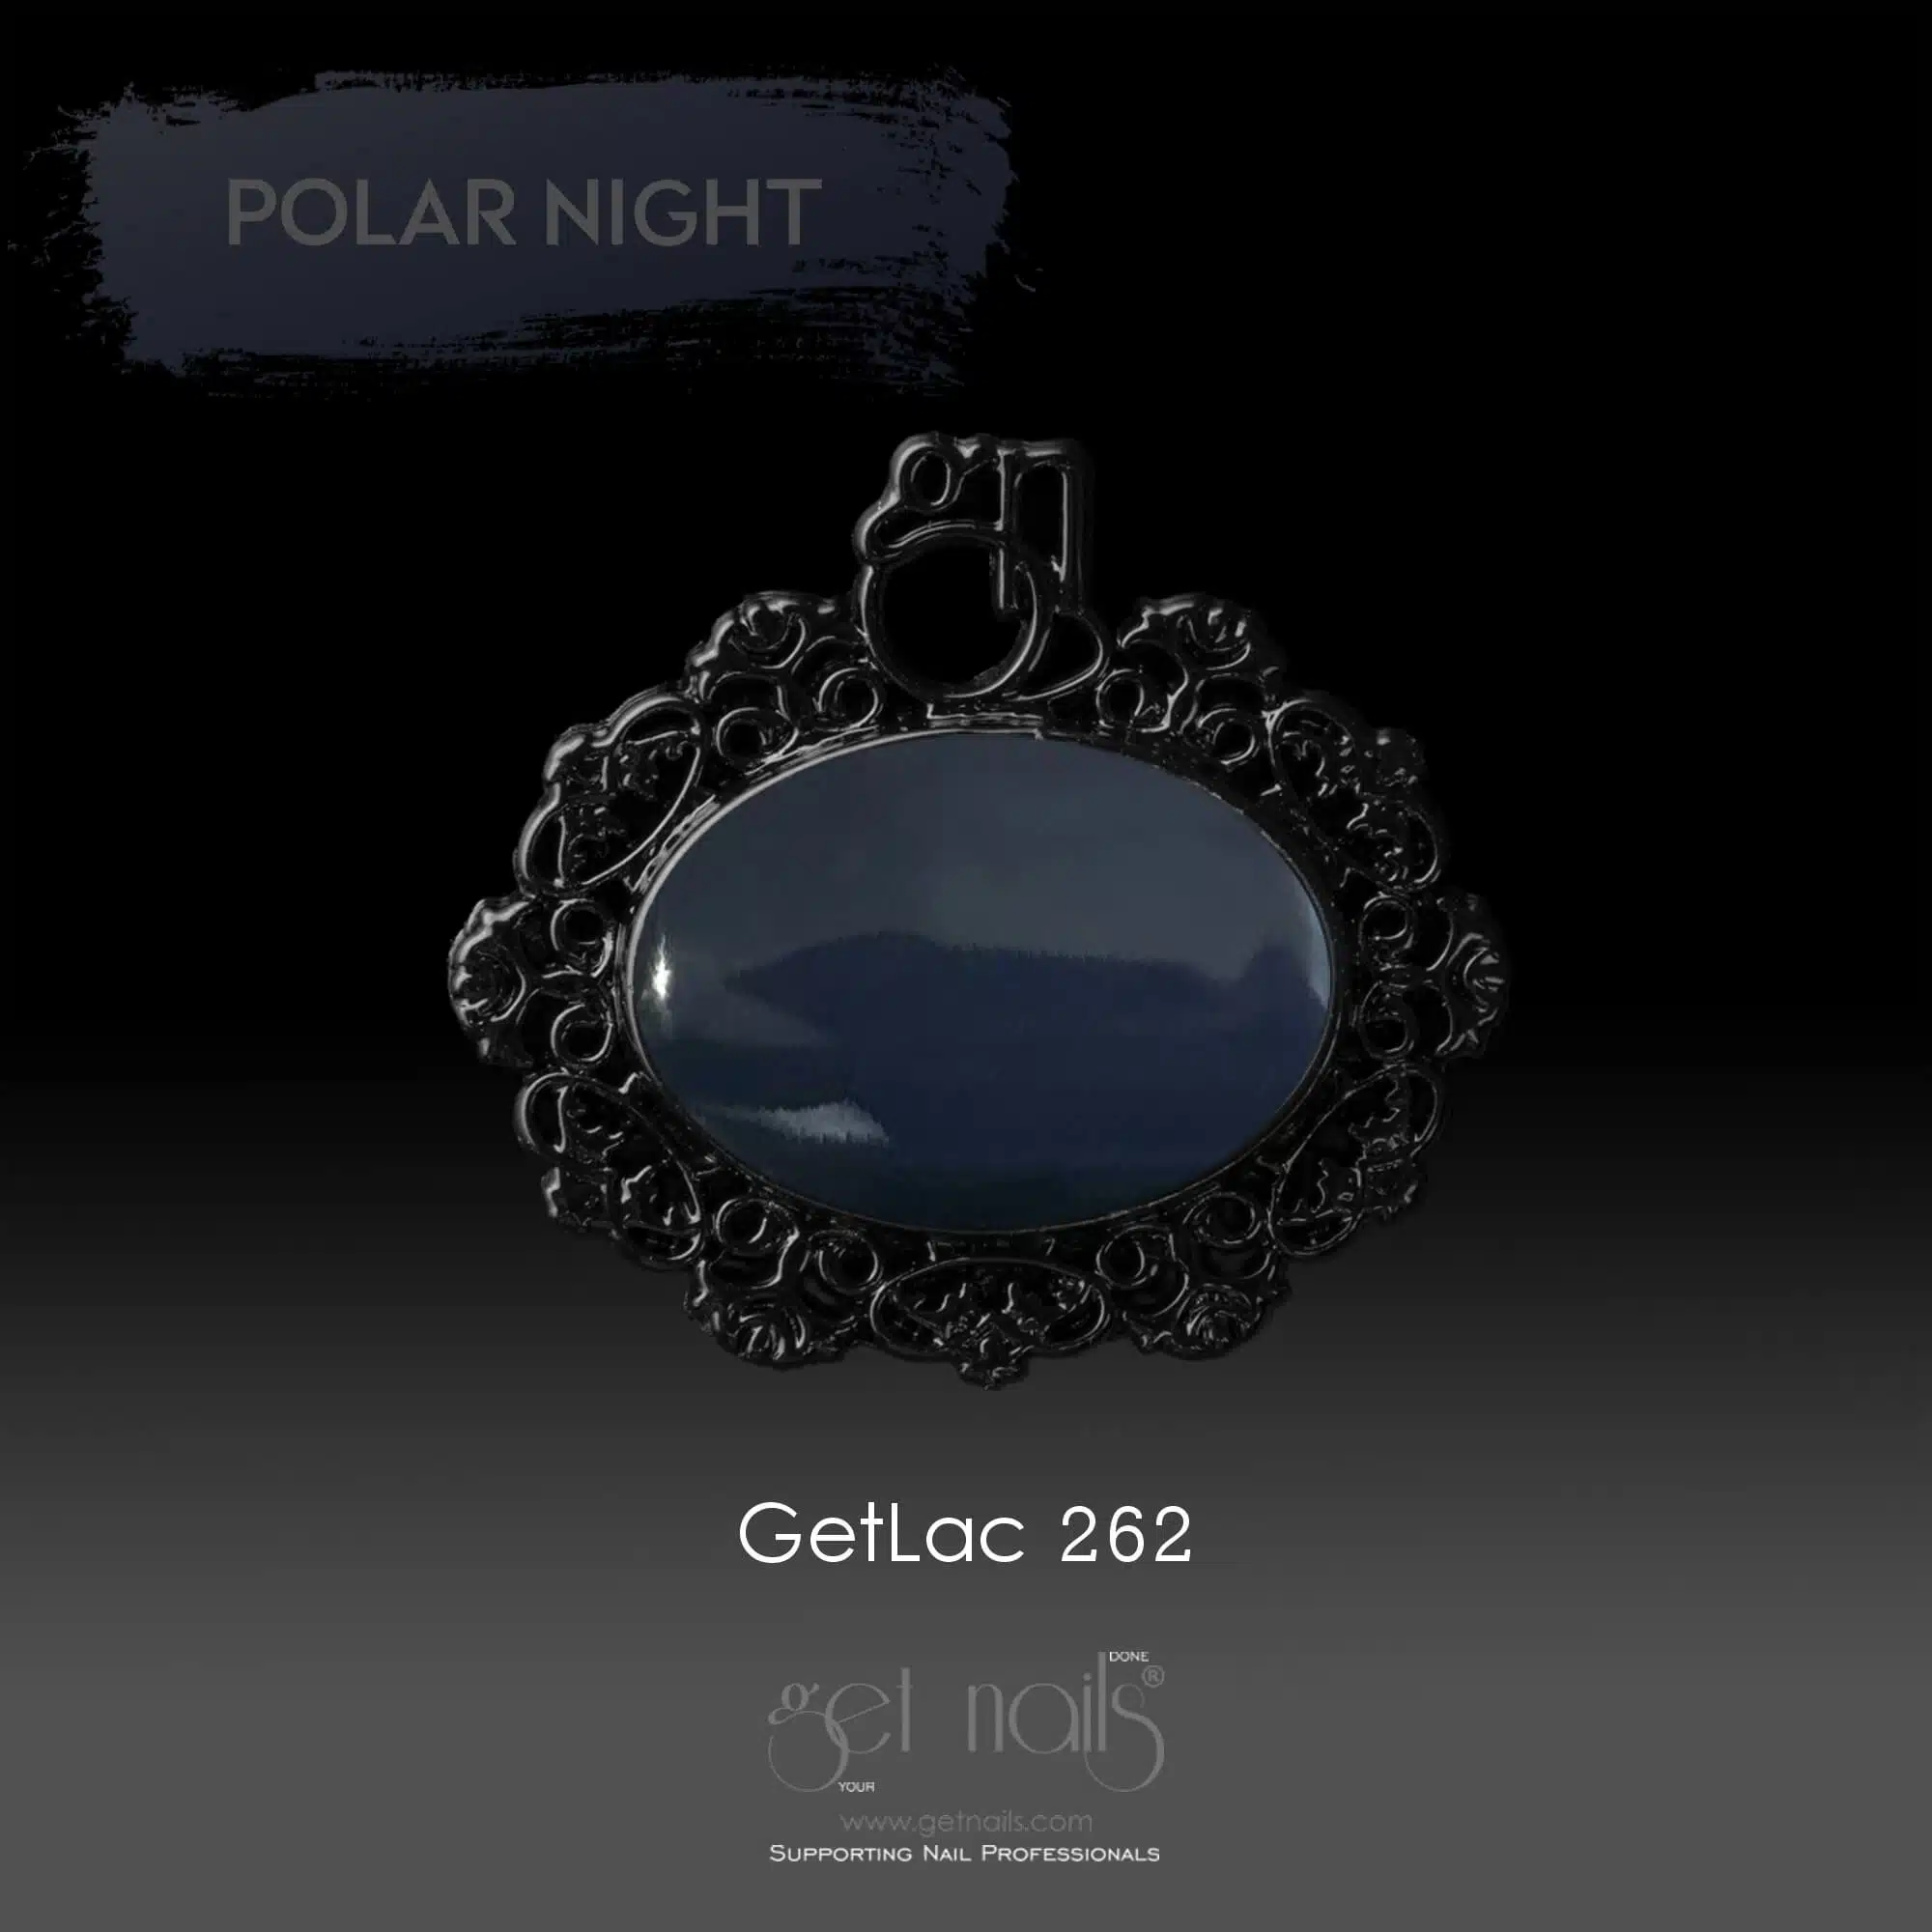 Get Nails Austrija - GetLac 262 Polar Night 15g